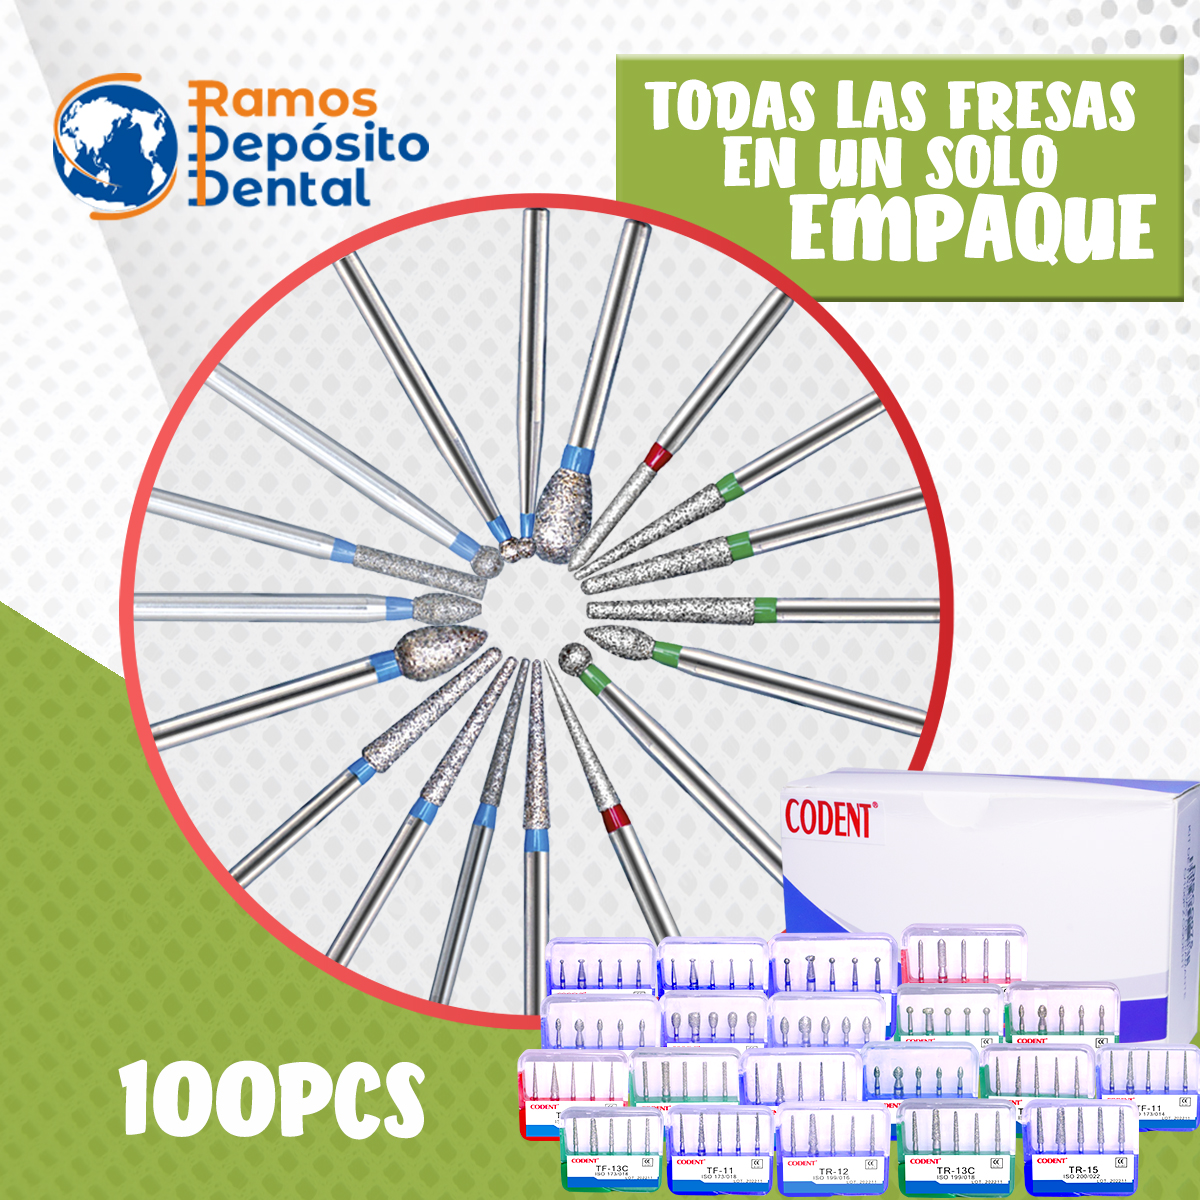 Fresas codent-deposito dental ramos-100pcs